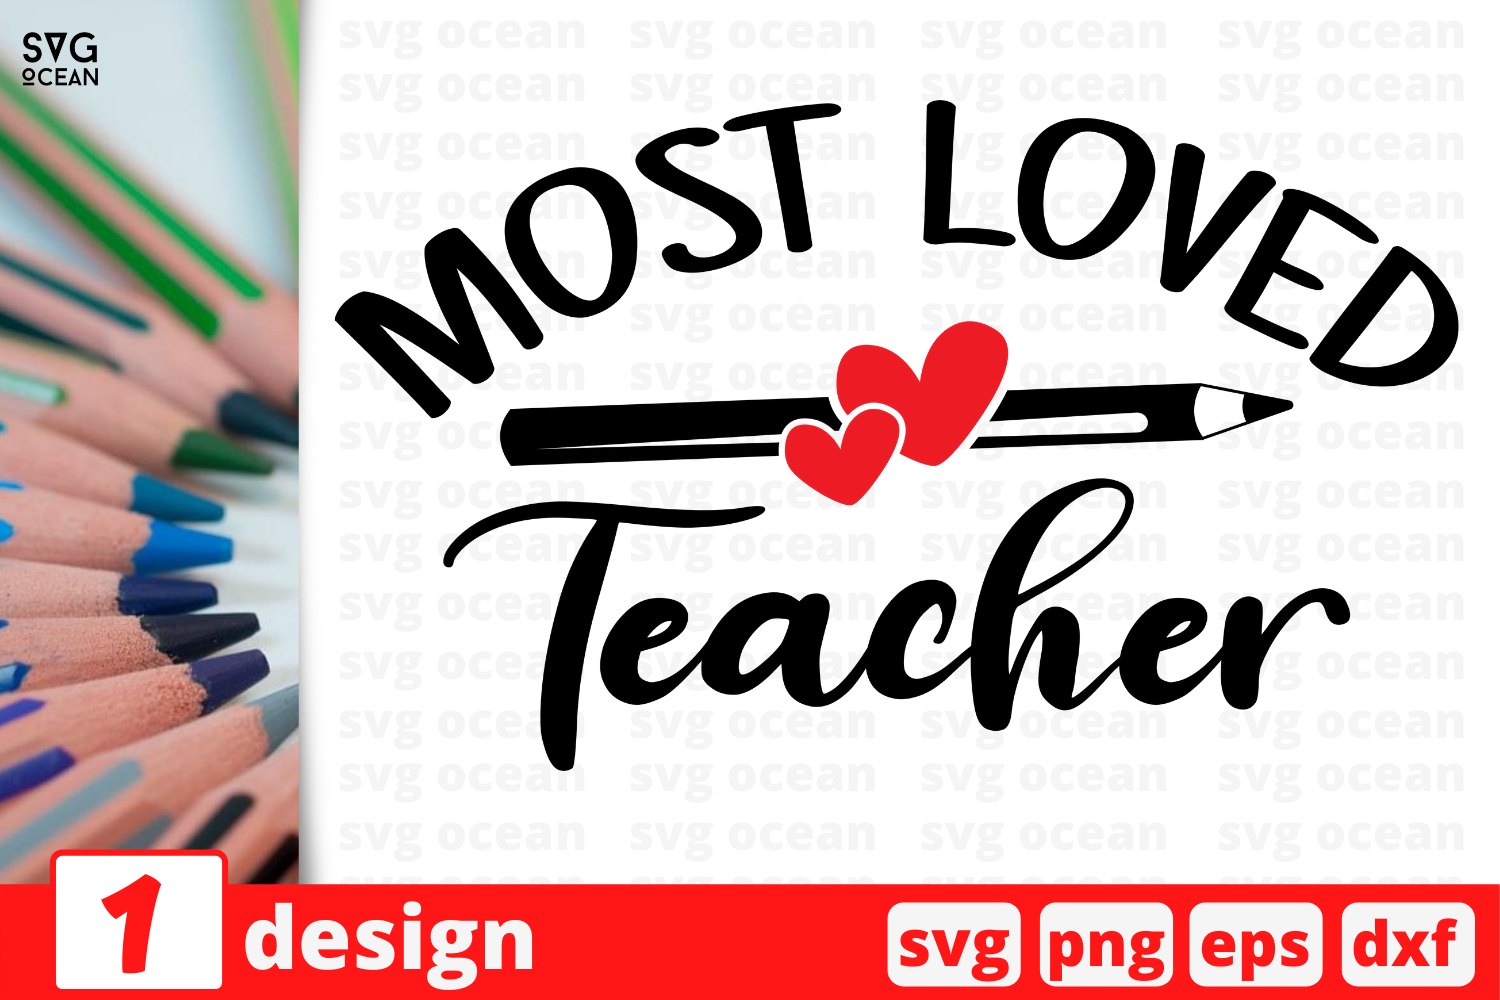 1 Most Loved Teacher Teacher Quotes Cricut Svg By Svgocean Thehungryjpeg Com